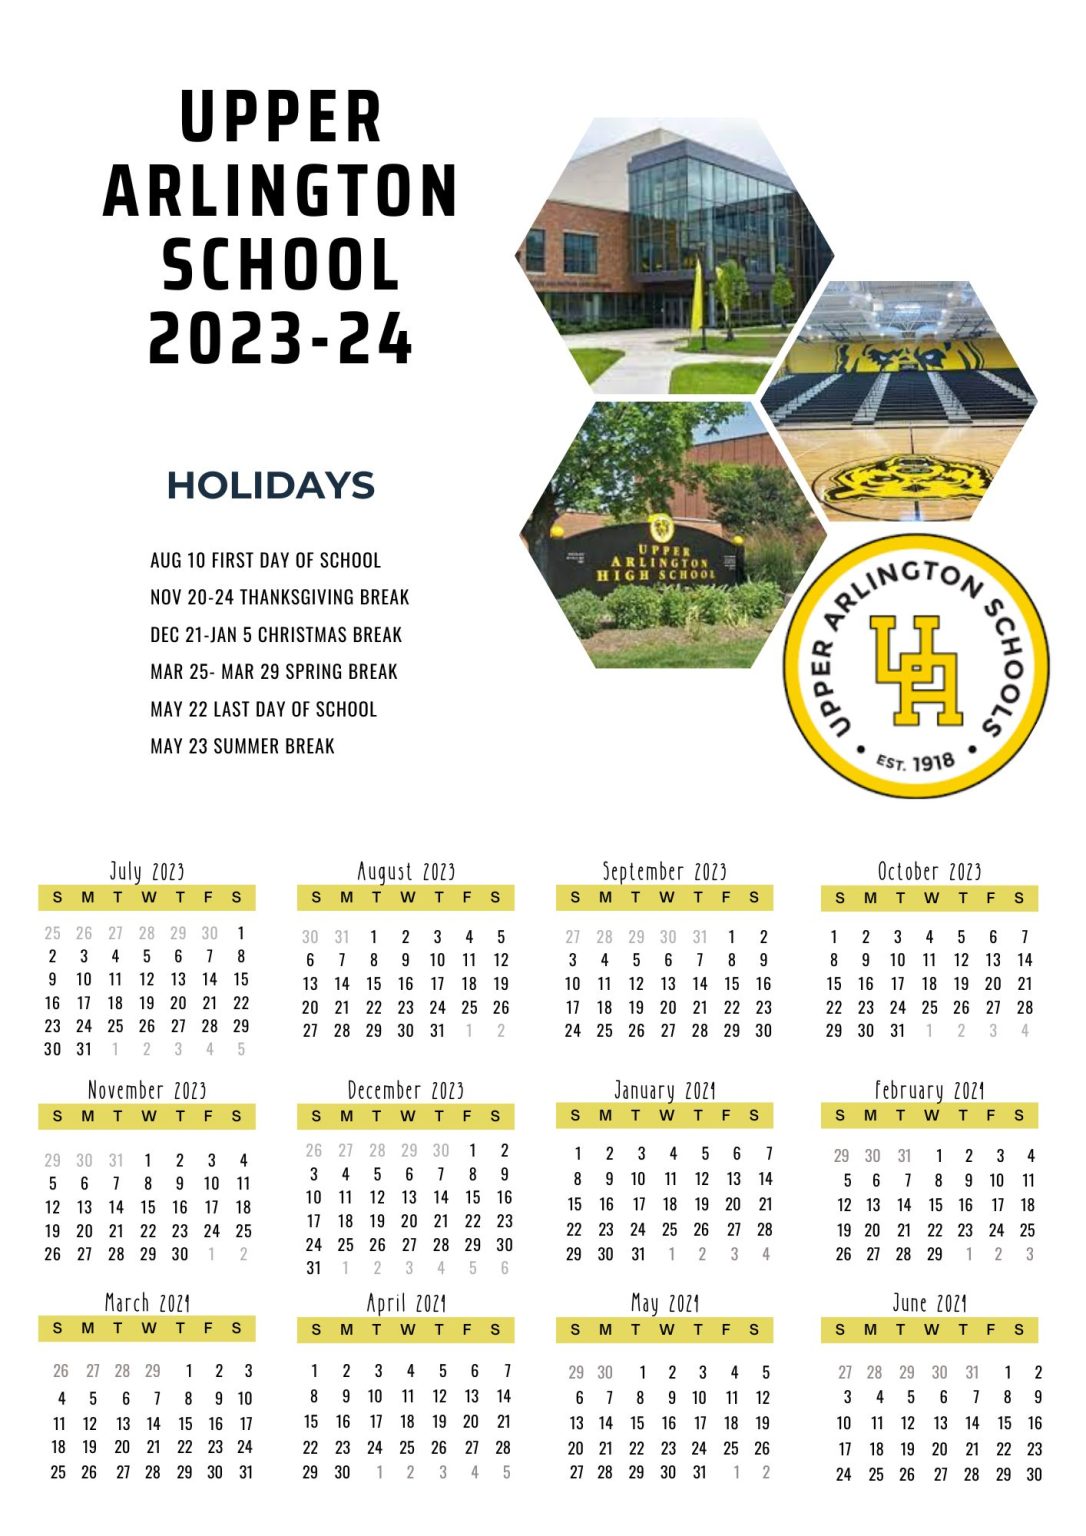 Upper Arlington Schools Calendar Holidays 20232024 (UASD)